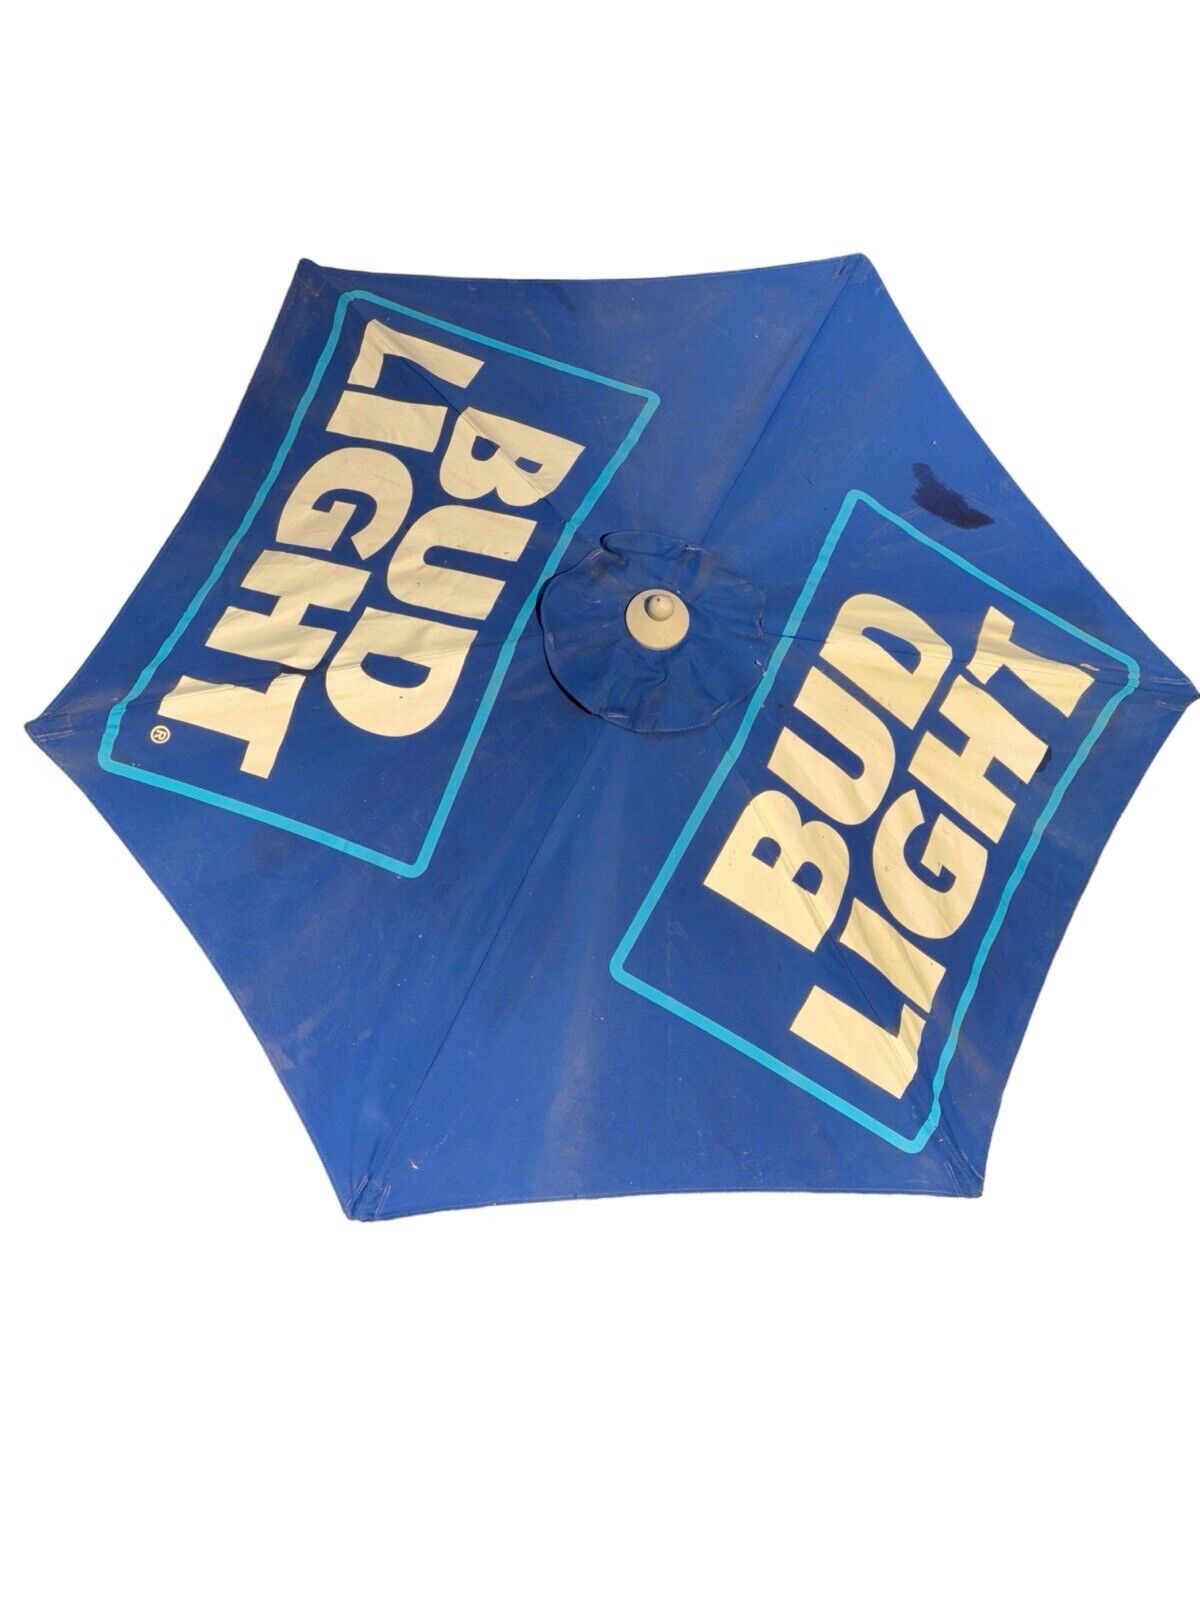 6.5FT Bud Light Beer Outdoor Patio Rest/Bar Umbrella Royal Blue W/6’ Pole